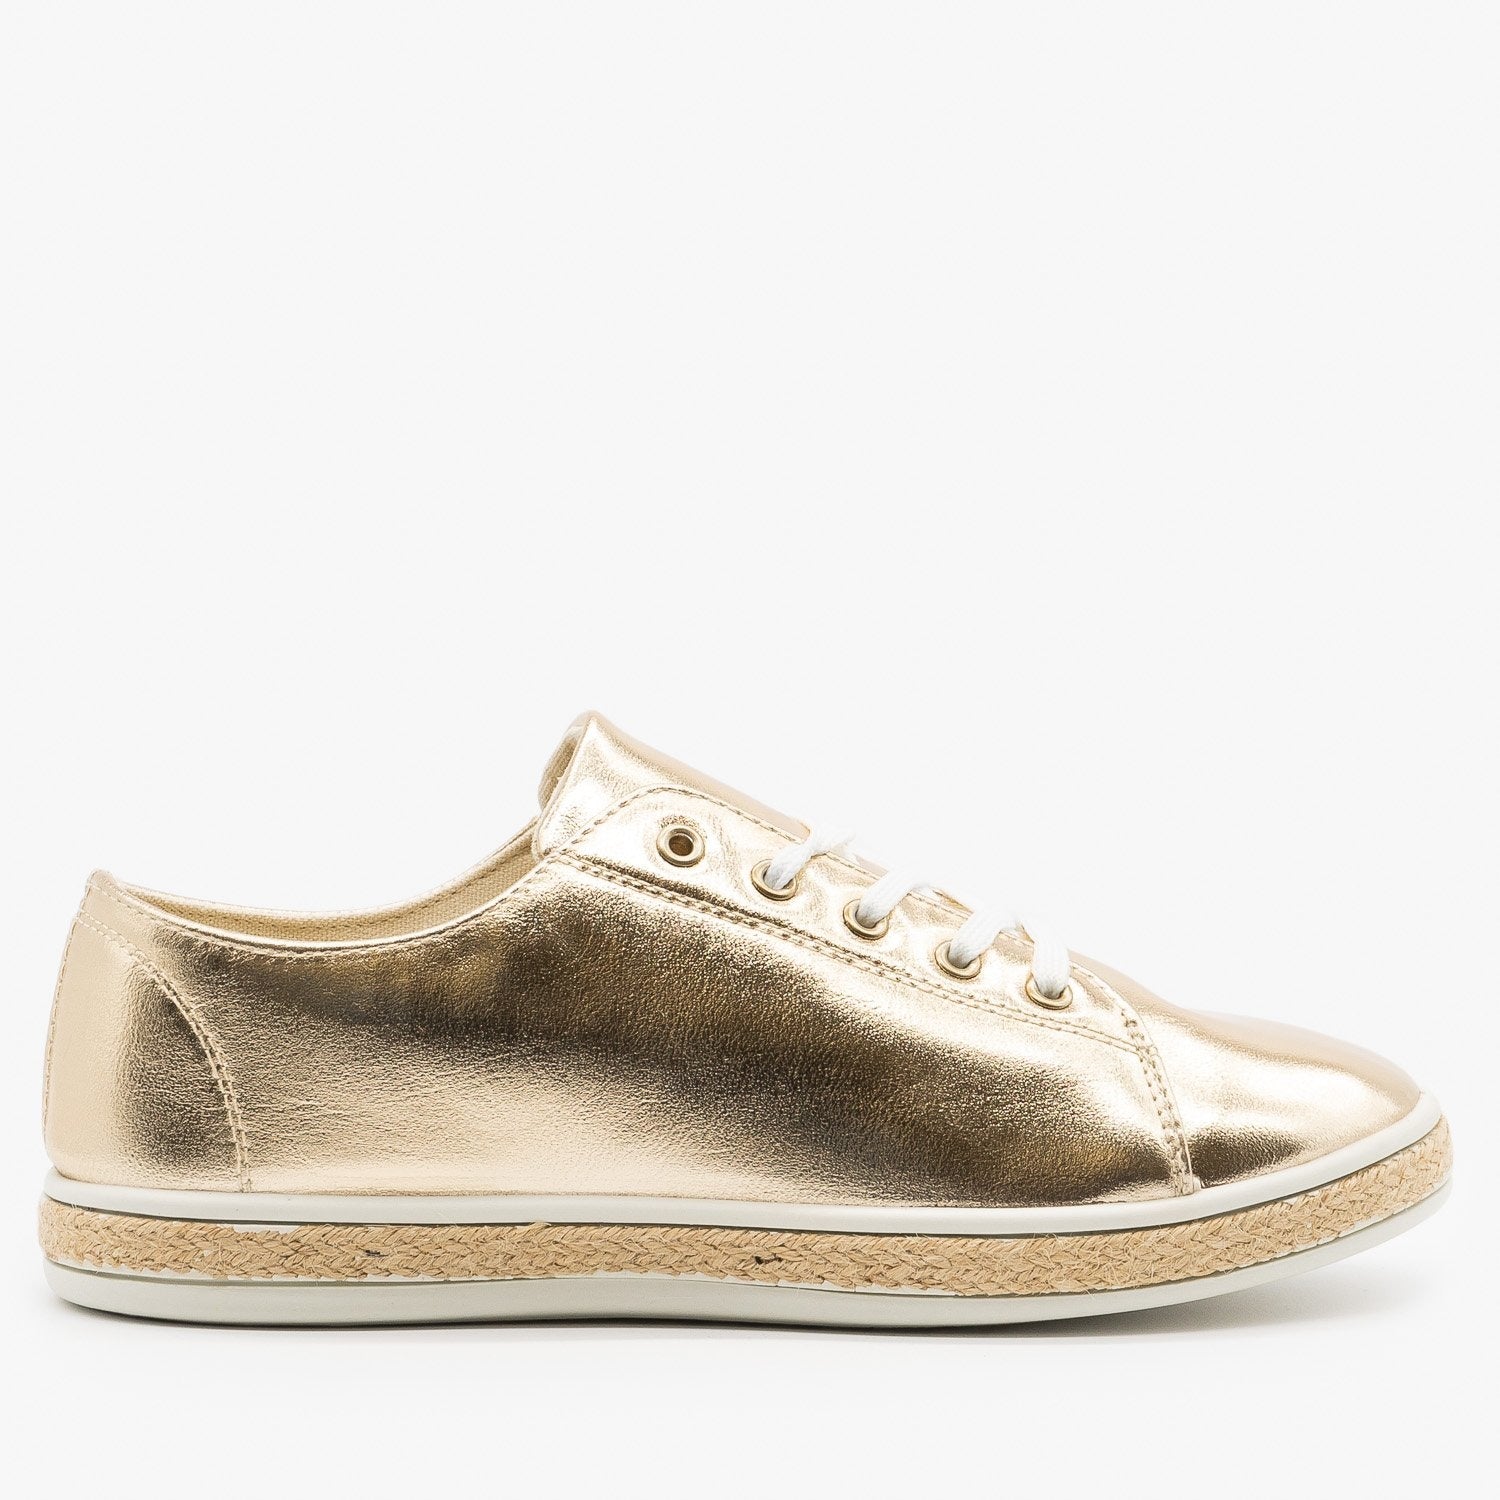 metallic gold sneakers women's shoes